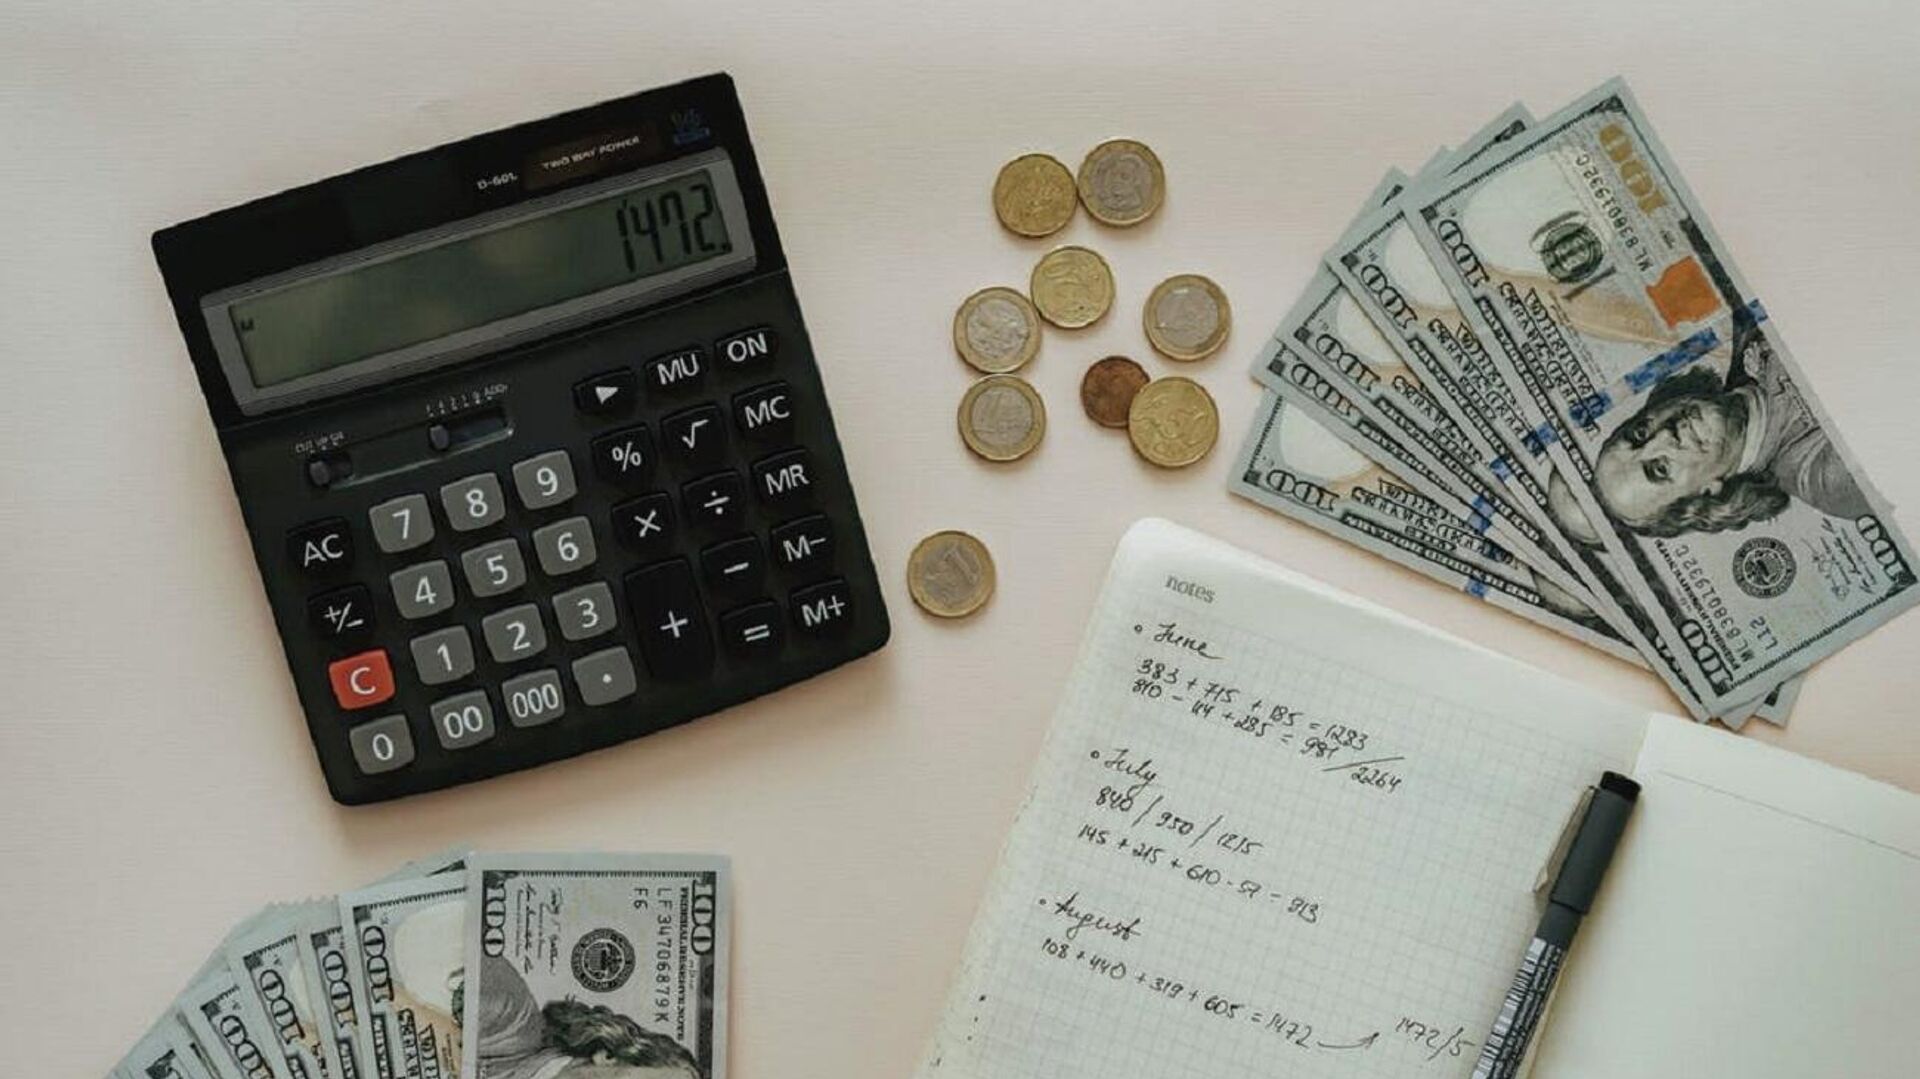 Налог калькулятор деньги ручка. - Sputnik Узбекистан, 1920, 20.03.2022